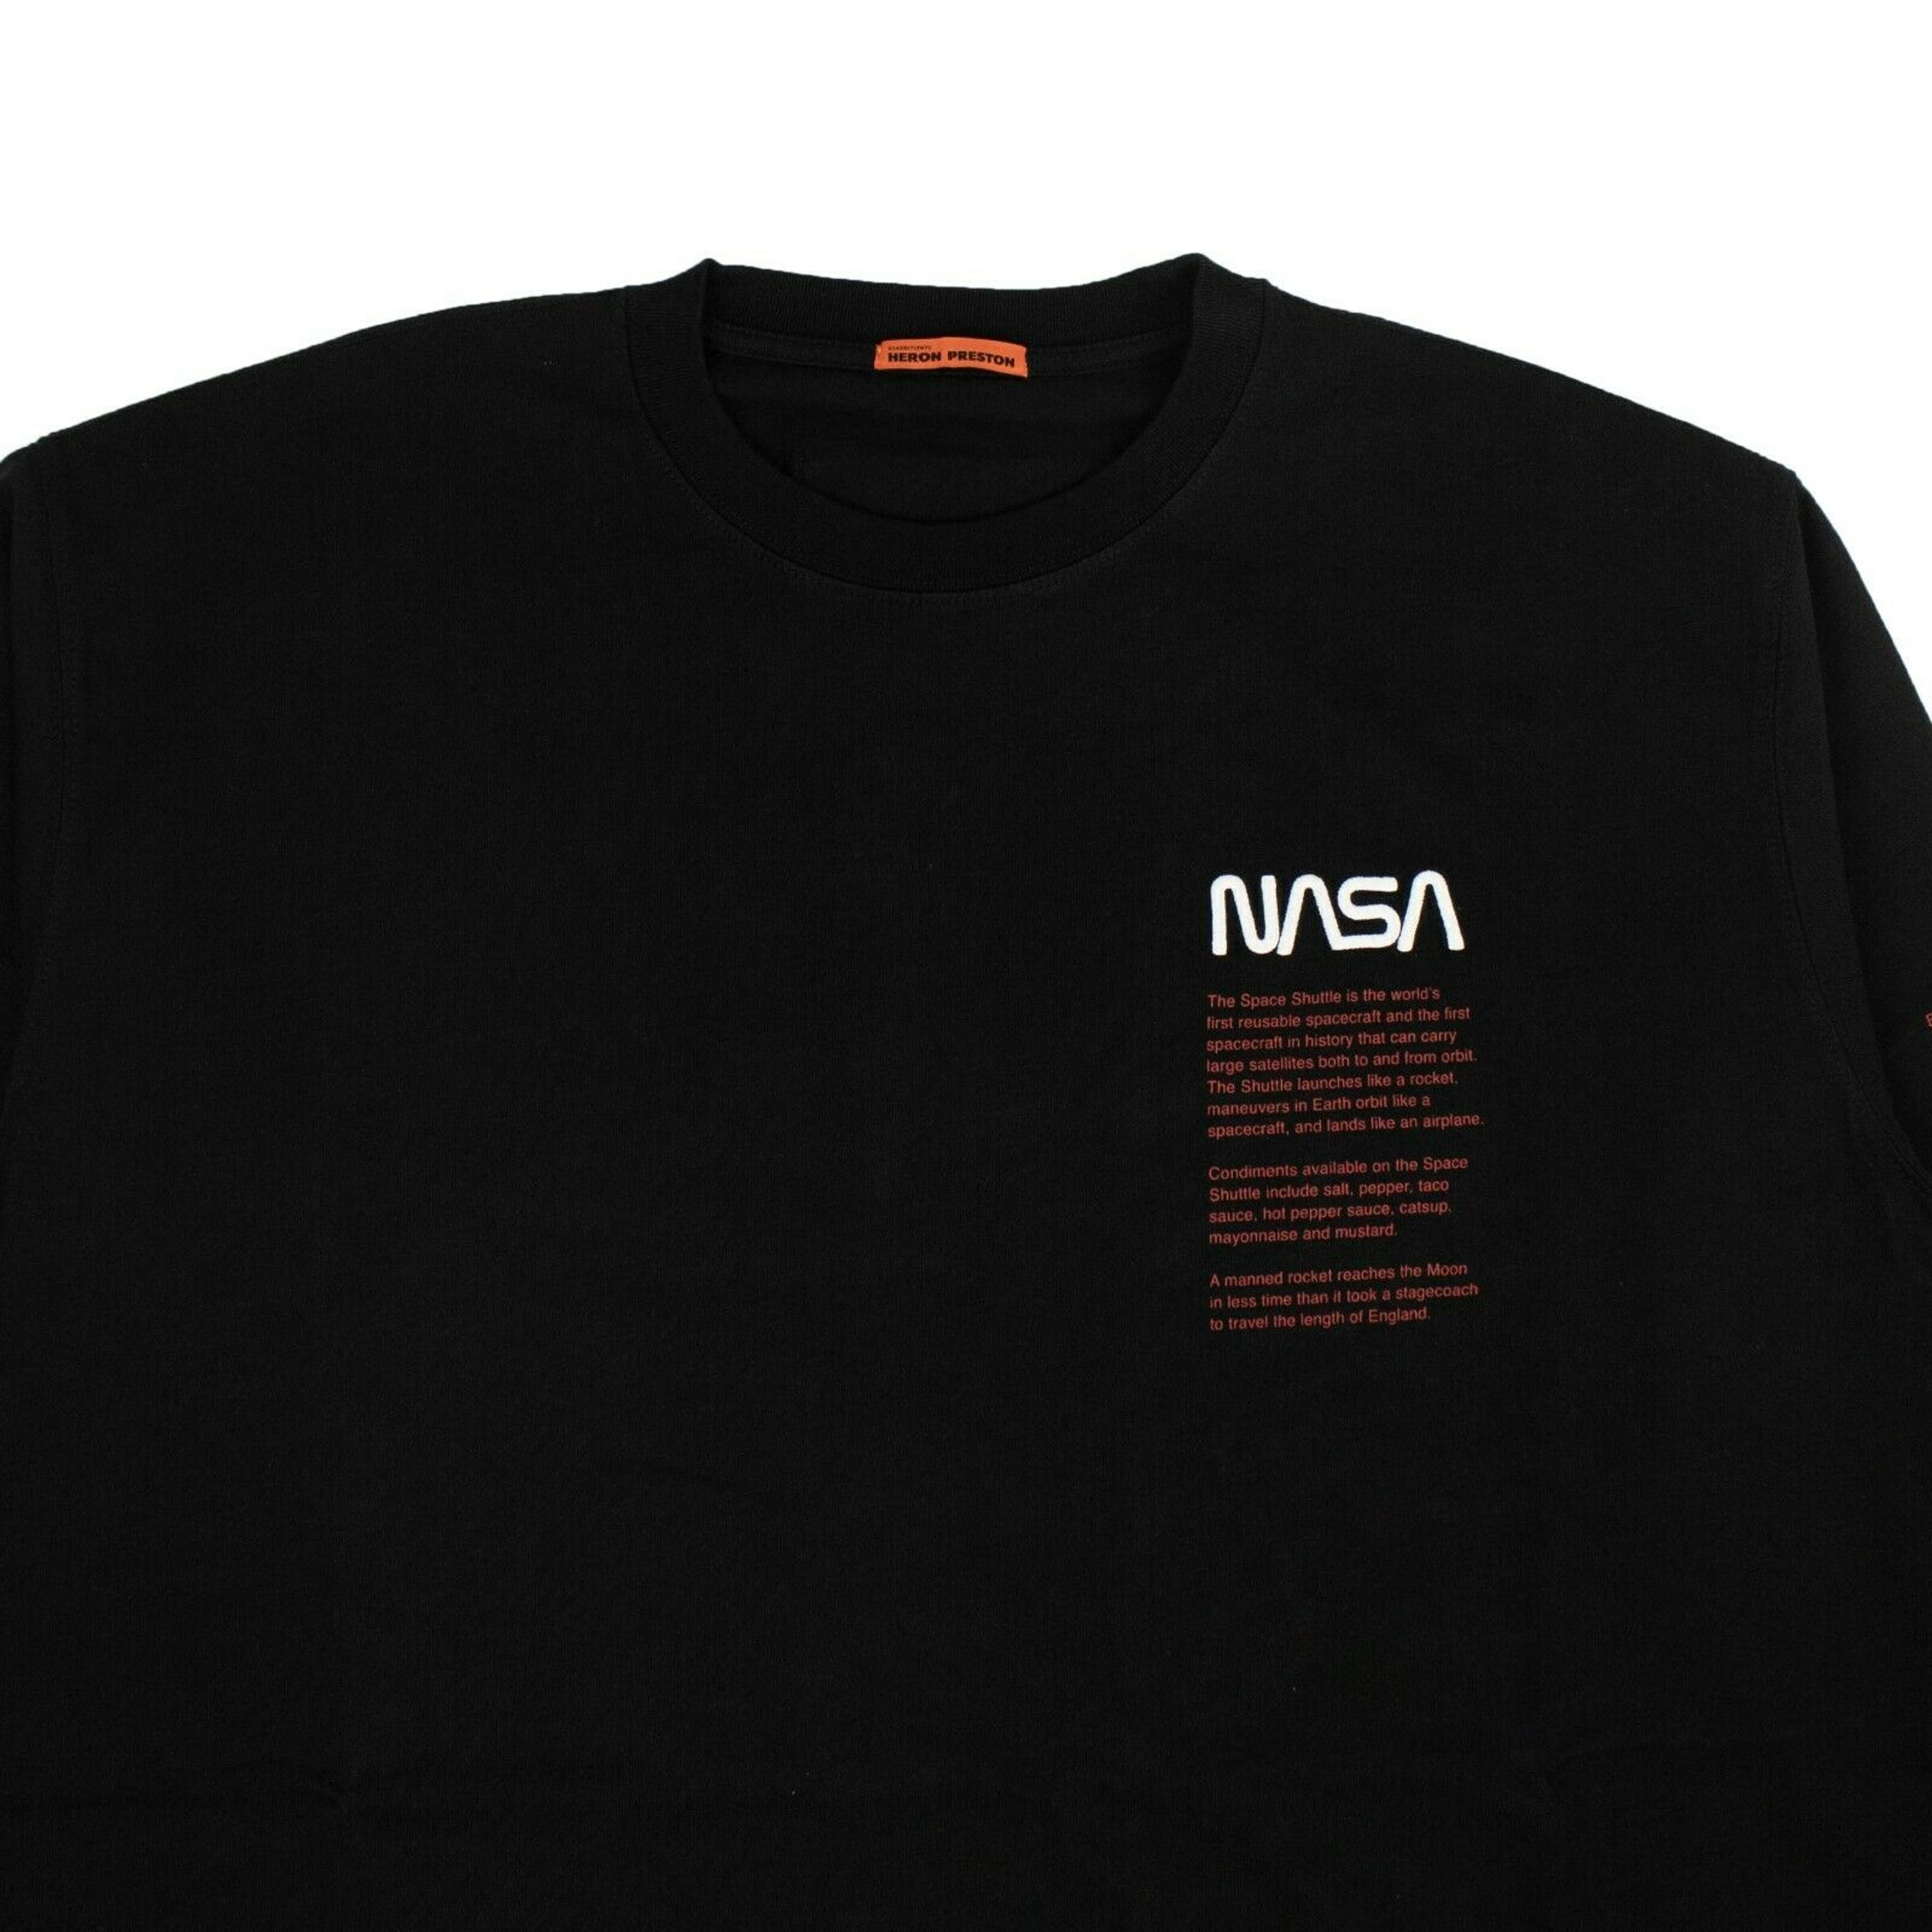 Alternate View 1 of Black Nasa Facts T-Shirt